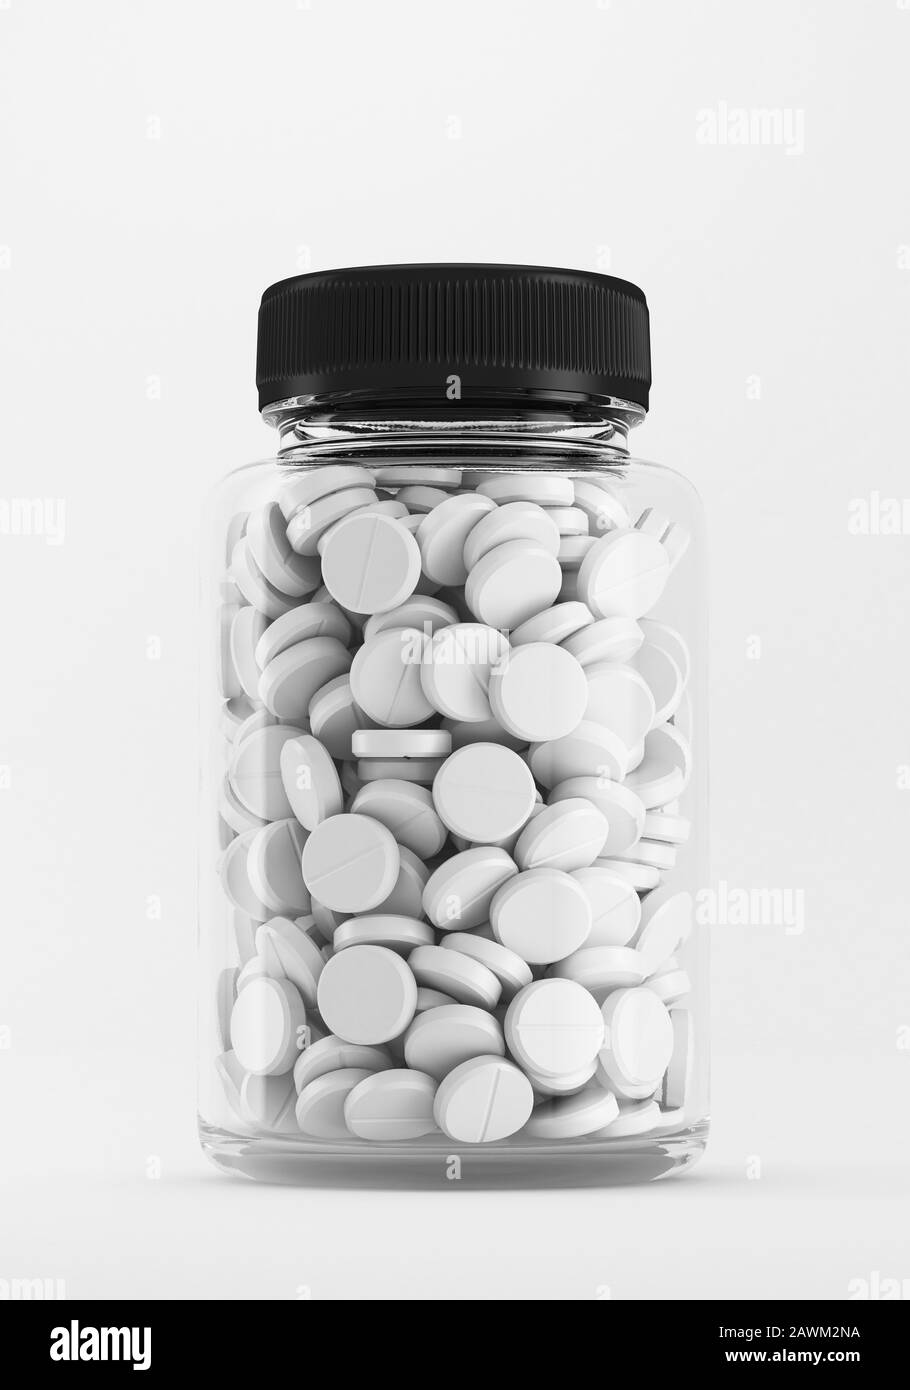 Transparent bottle full of white aspirin pills against white background. Supplement and antibiotics product mockup. Stock Photo